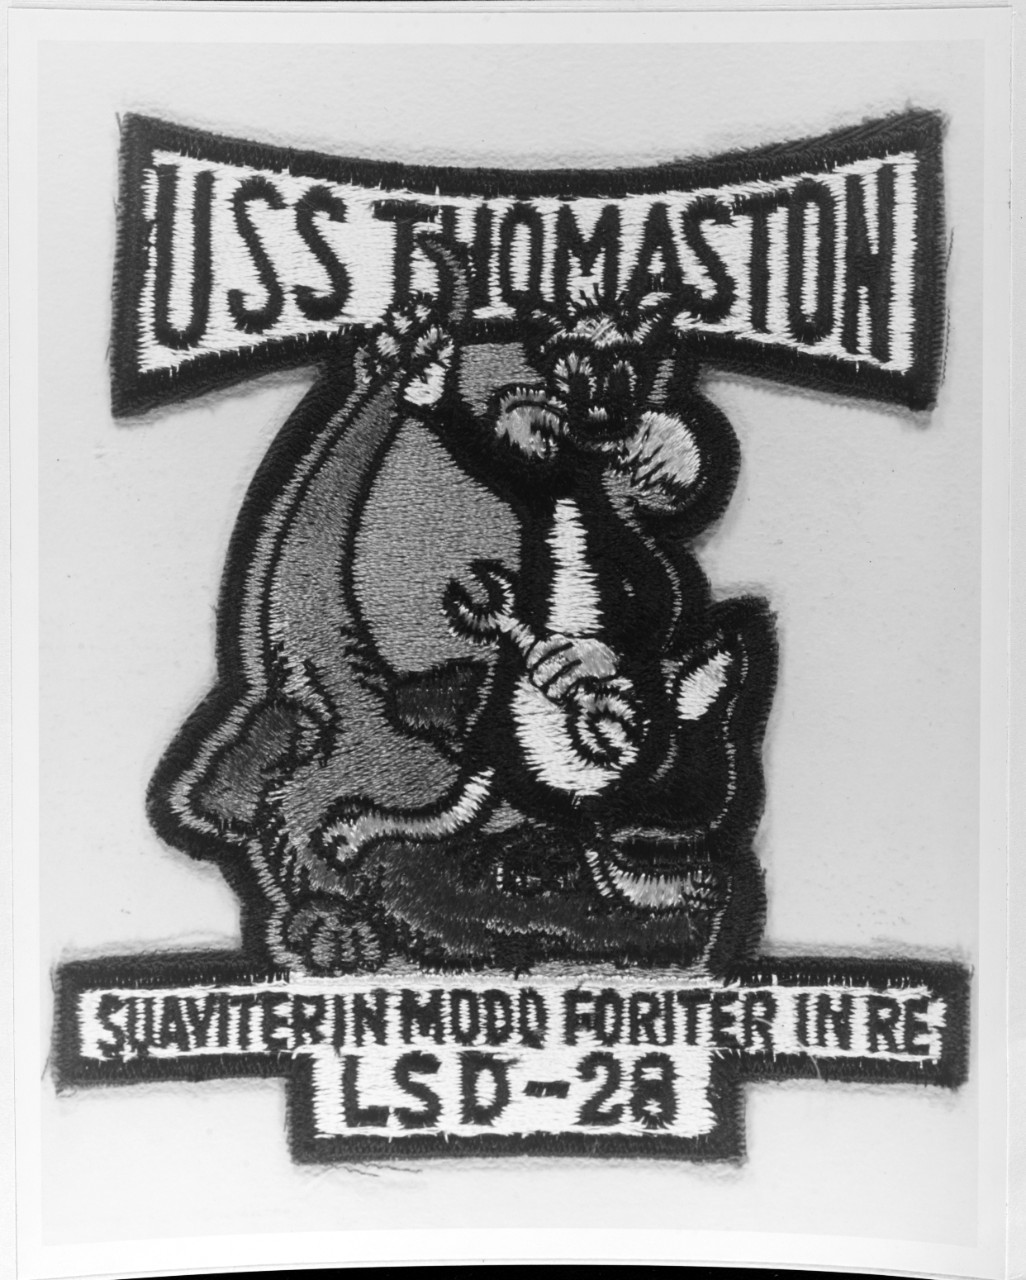 Insignia:  USS THOMASTON (LSD-28)